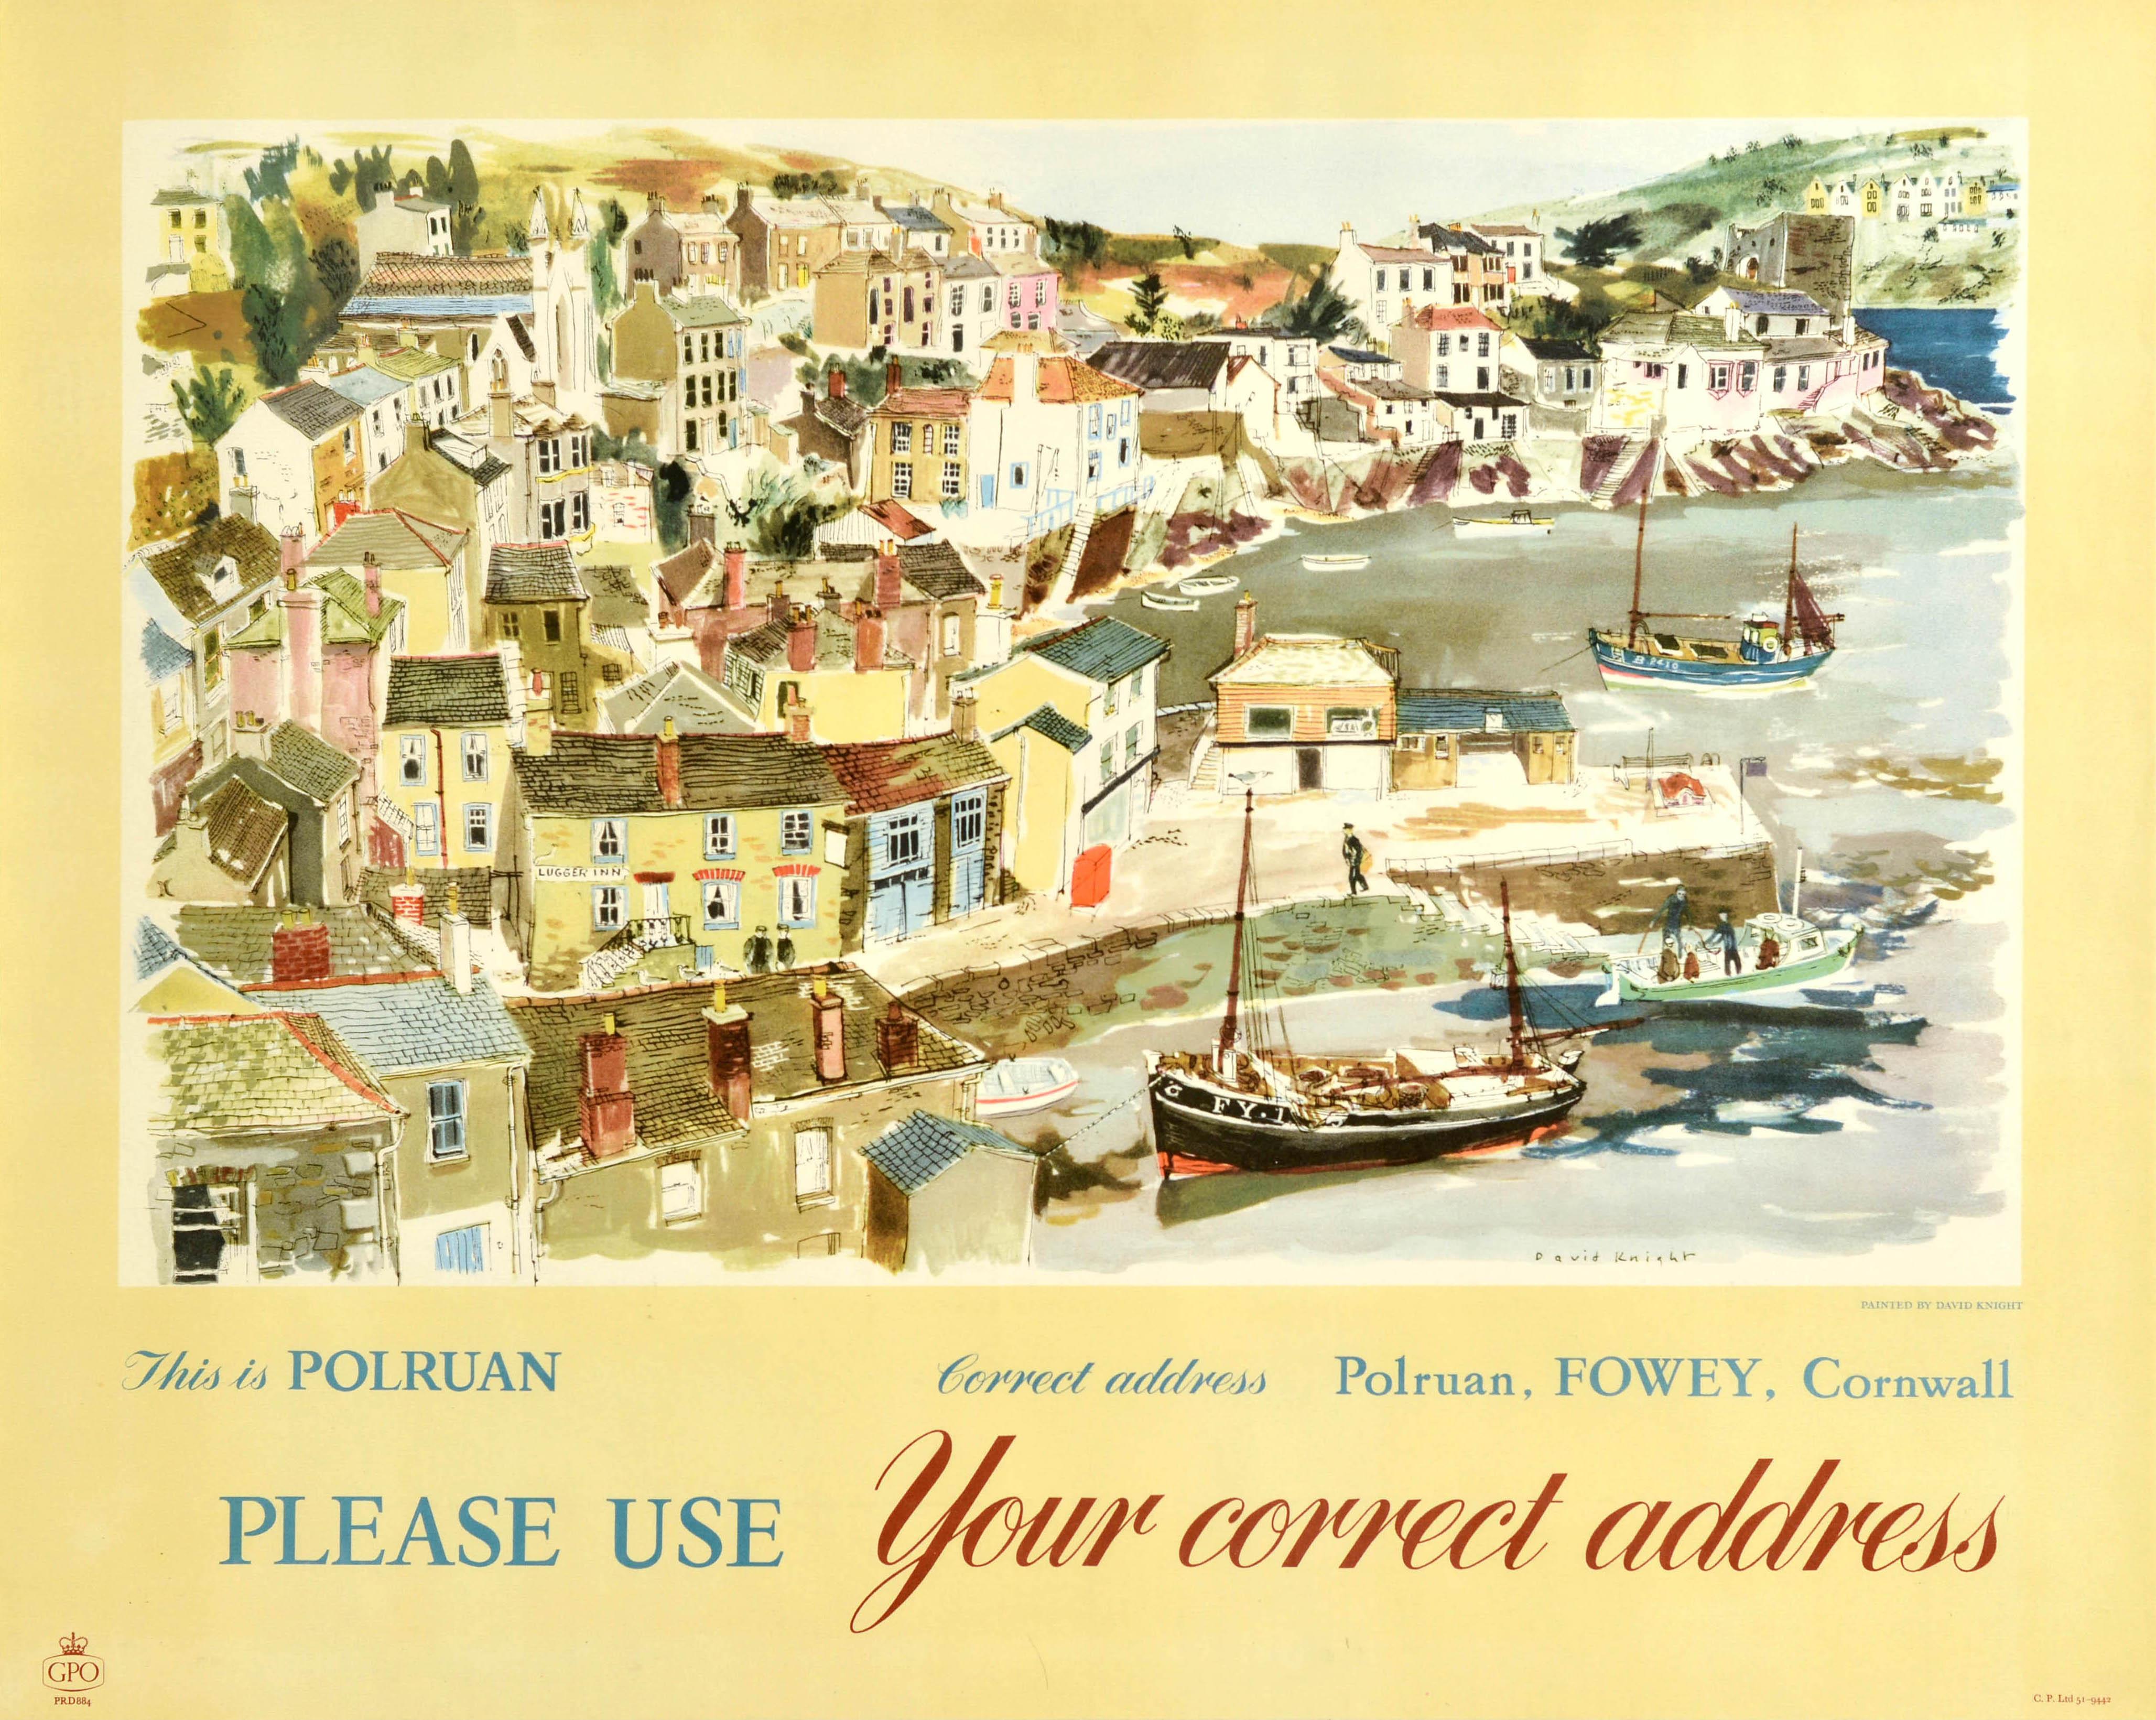 David Knight Print - Original Vintage Post Office Advertising Poster Polruan Fowey Cornwall GPO UK